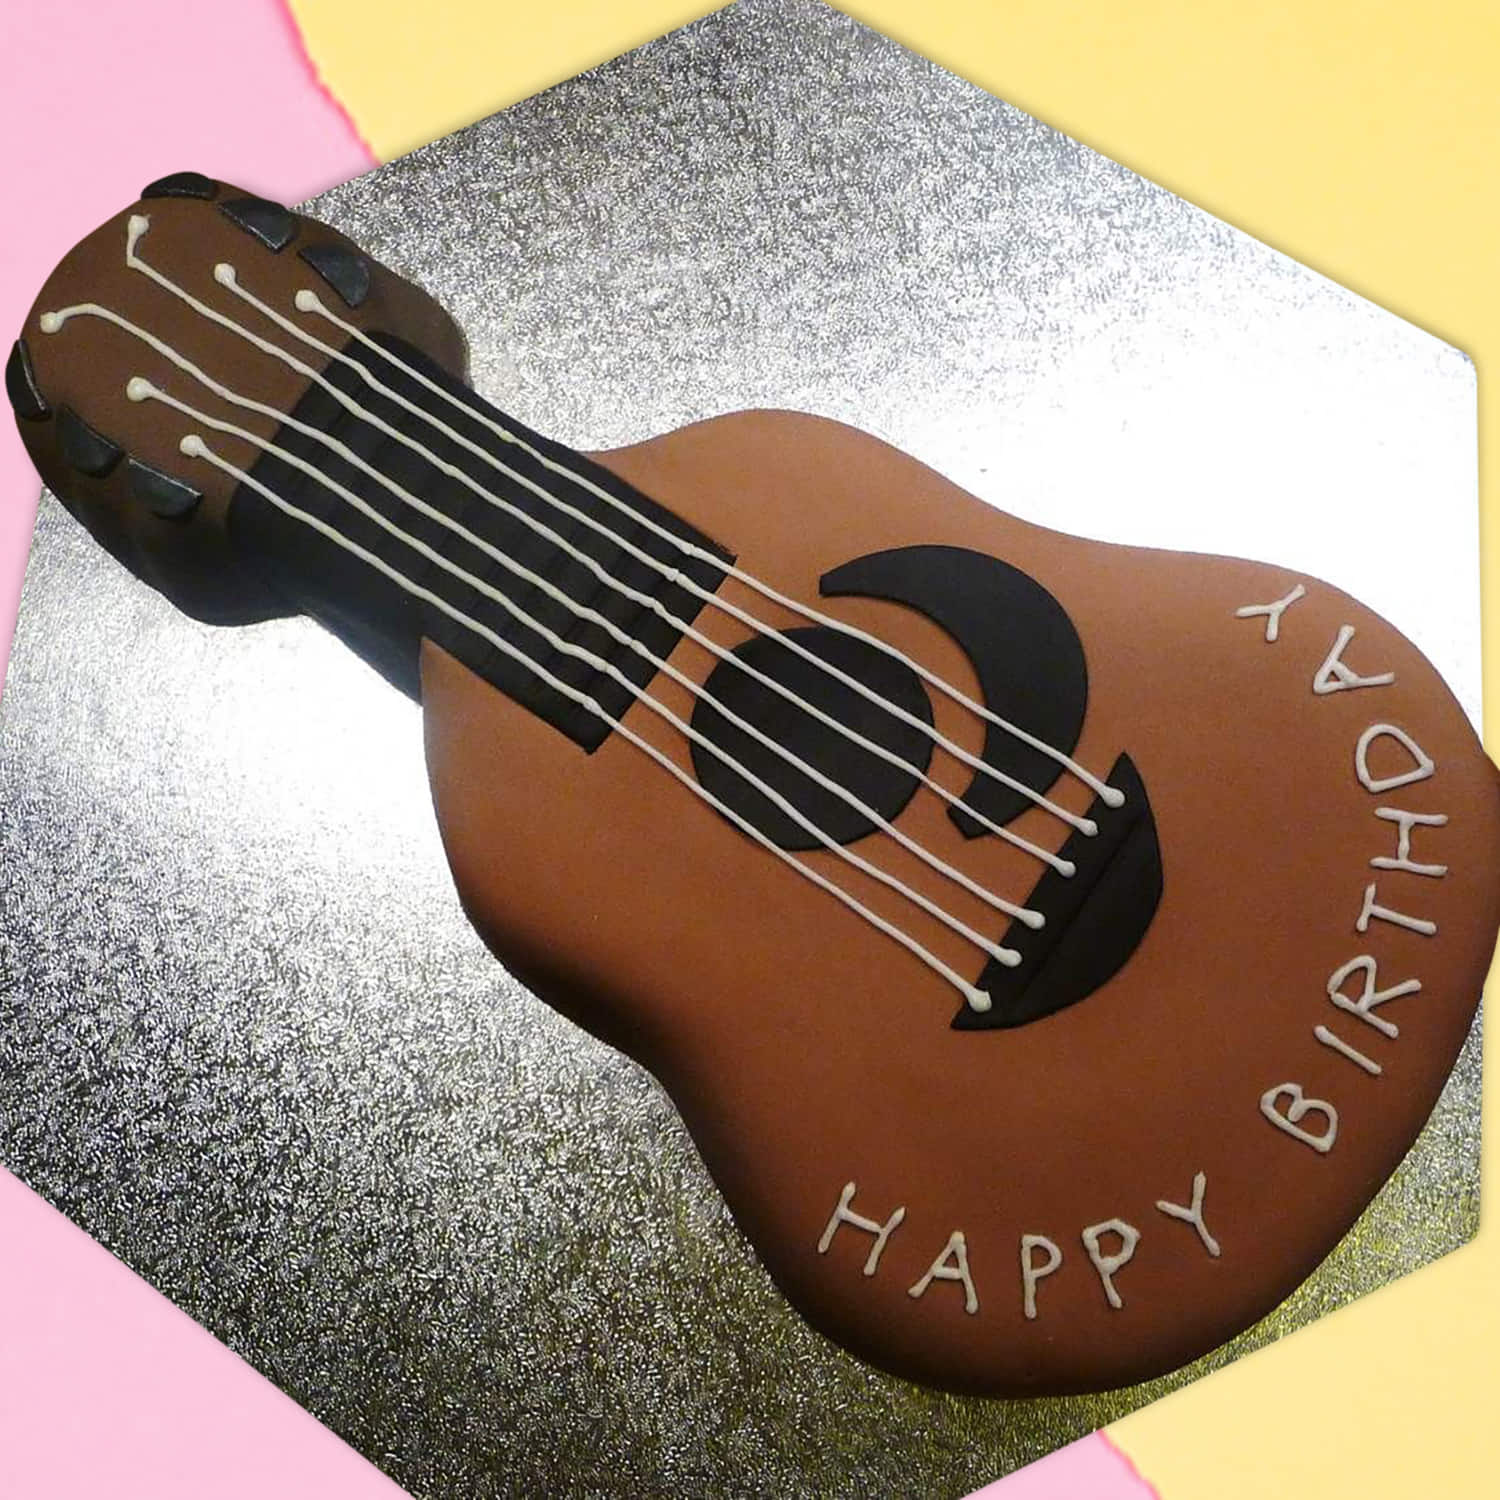 Buy Guitar Birthday Cake Online | Free Home Delivery | Yummycake